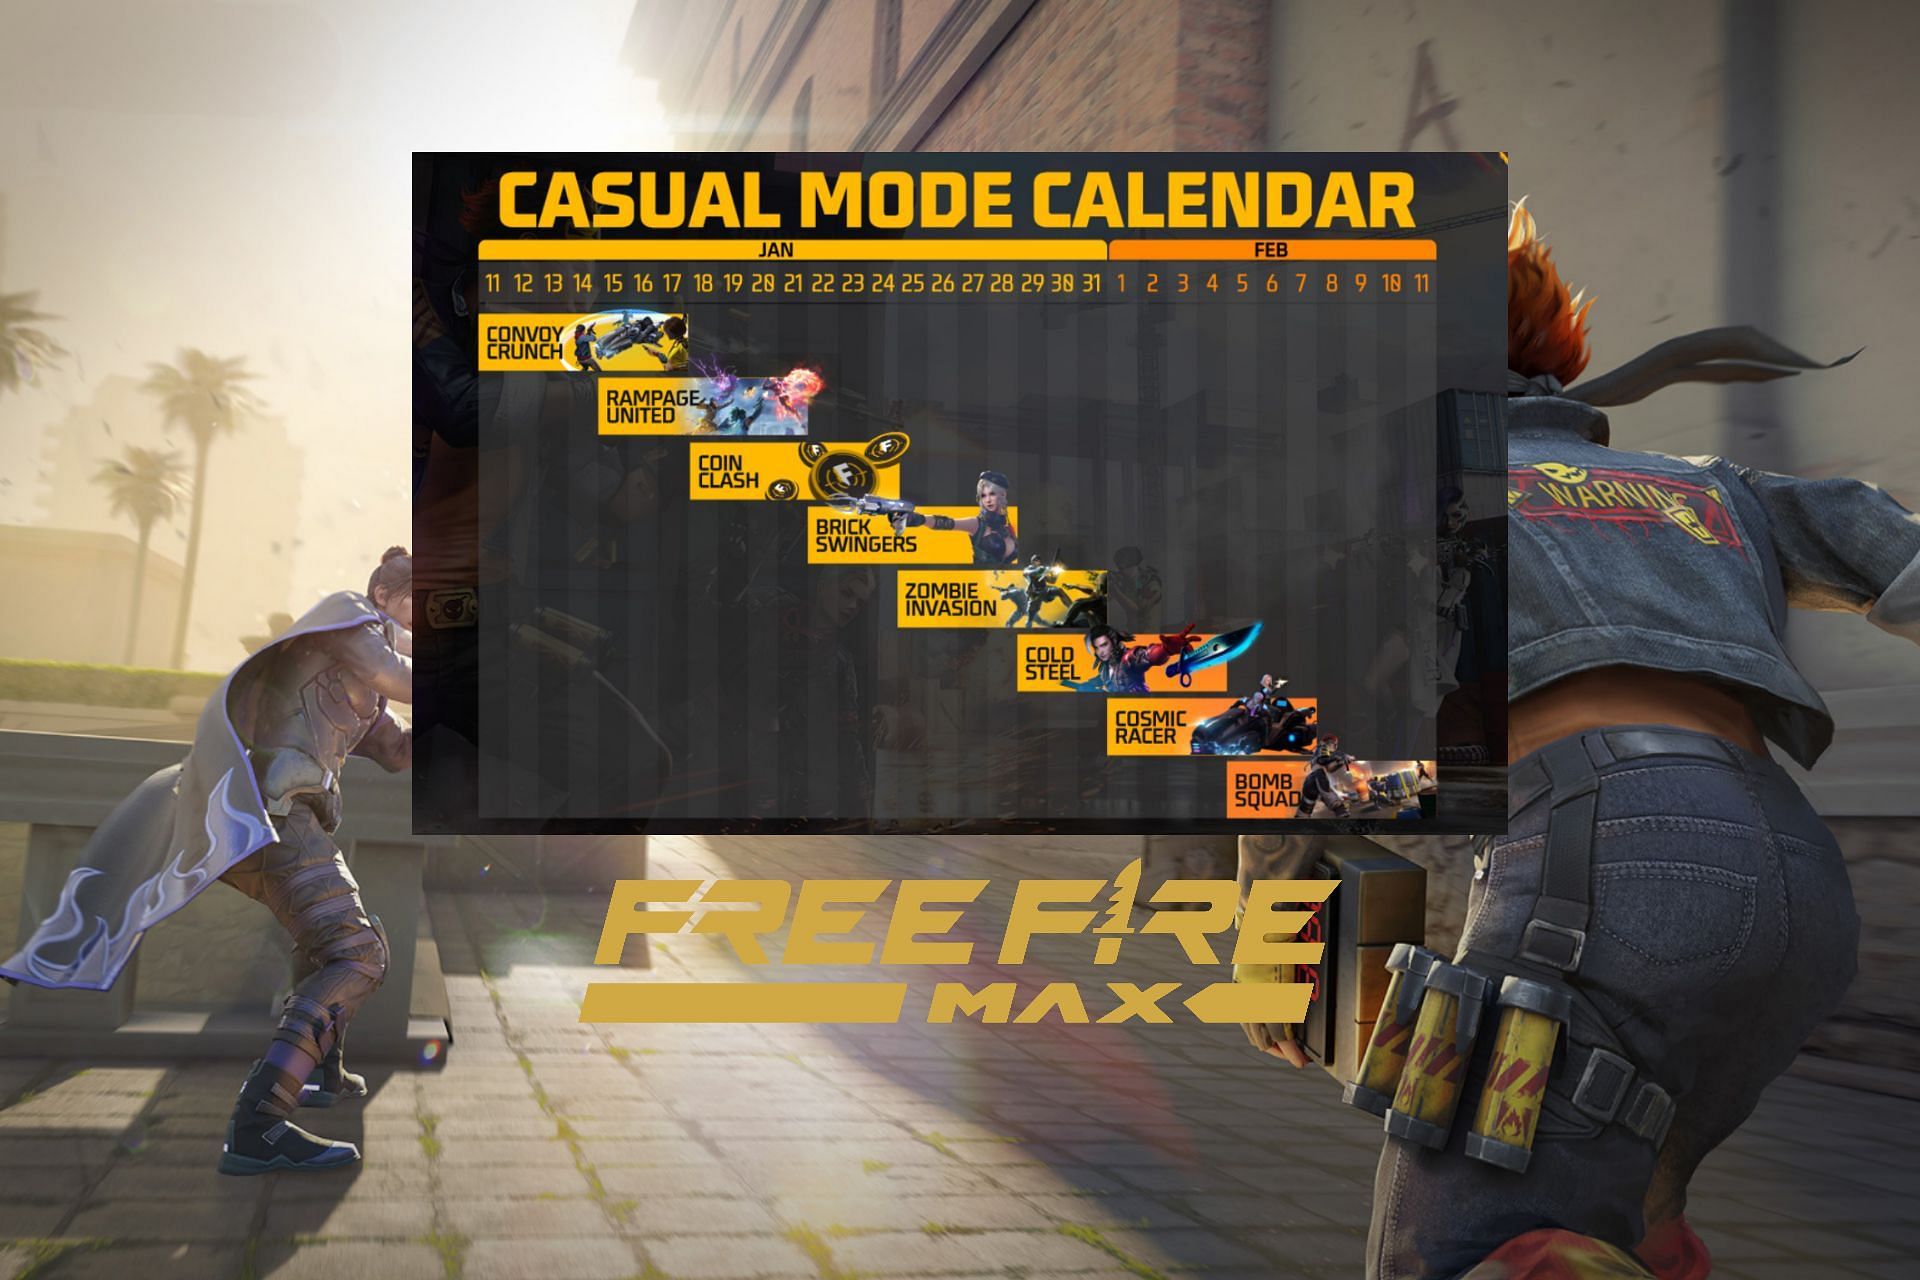 Free Fire MAX Casual Mode Calendar has been unveiled (Image via Sportskeeda)